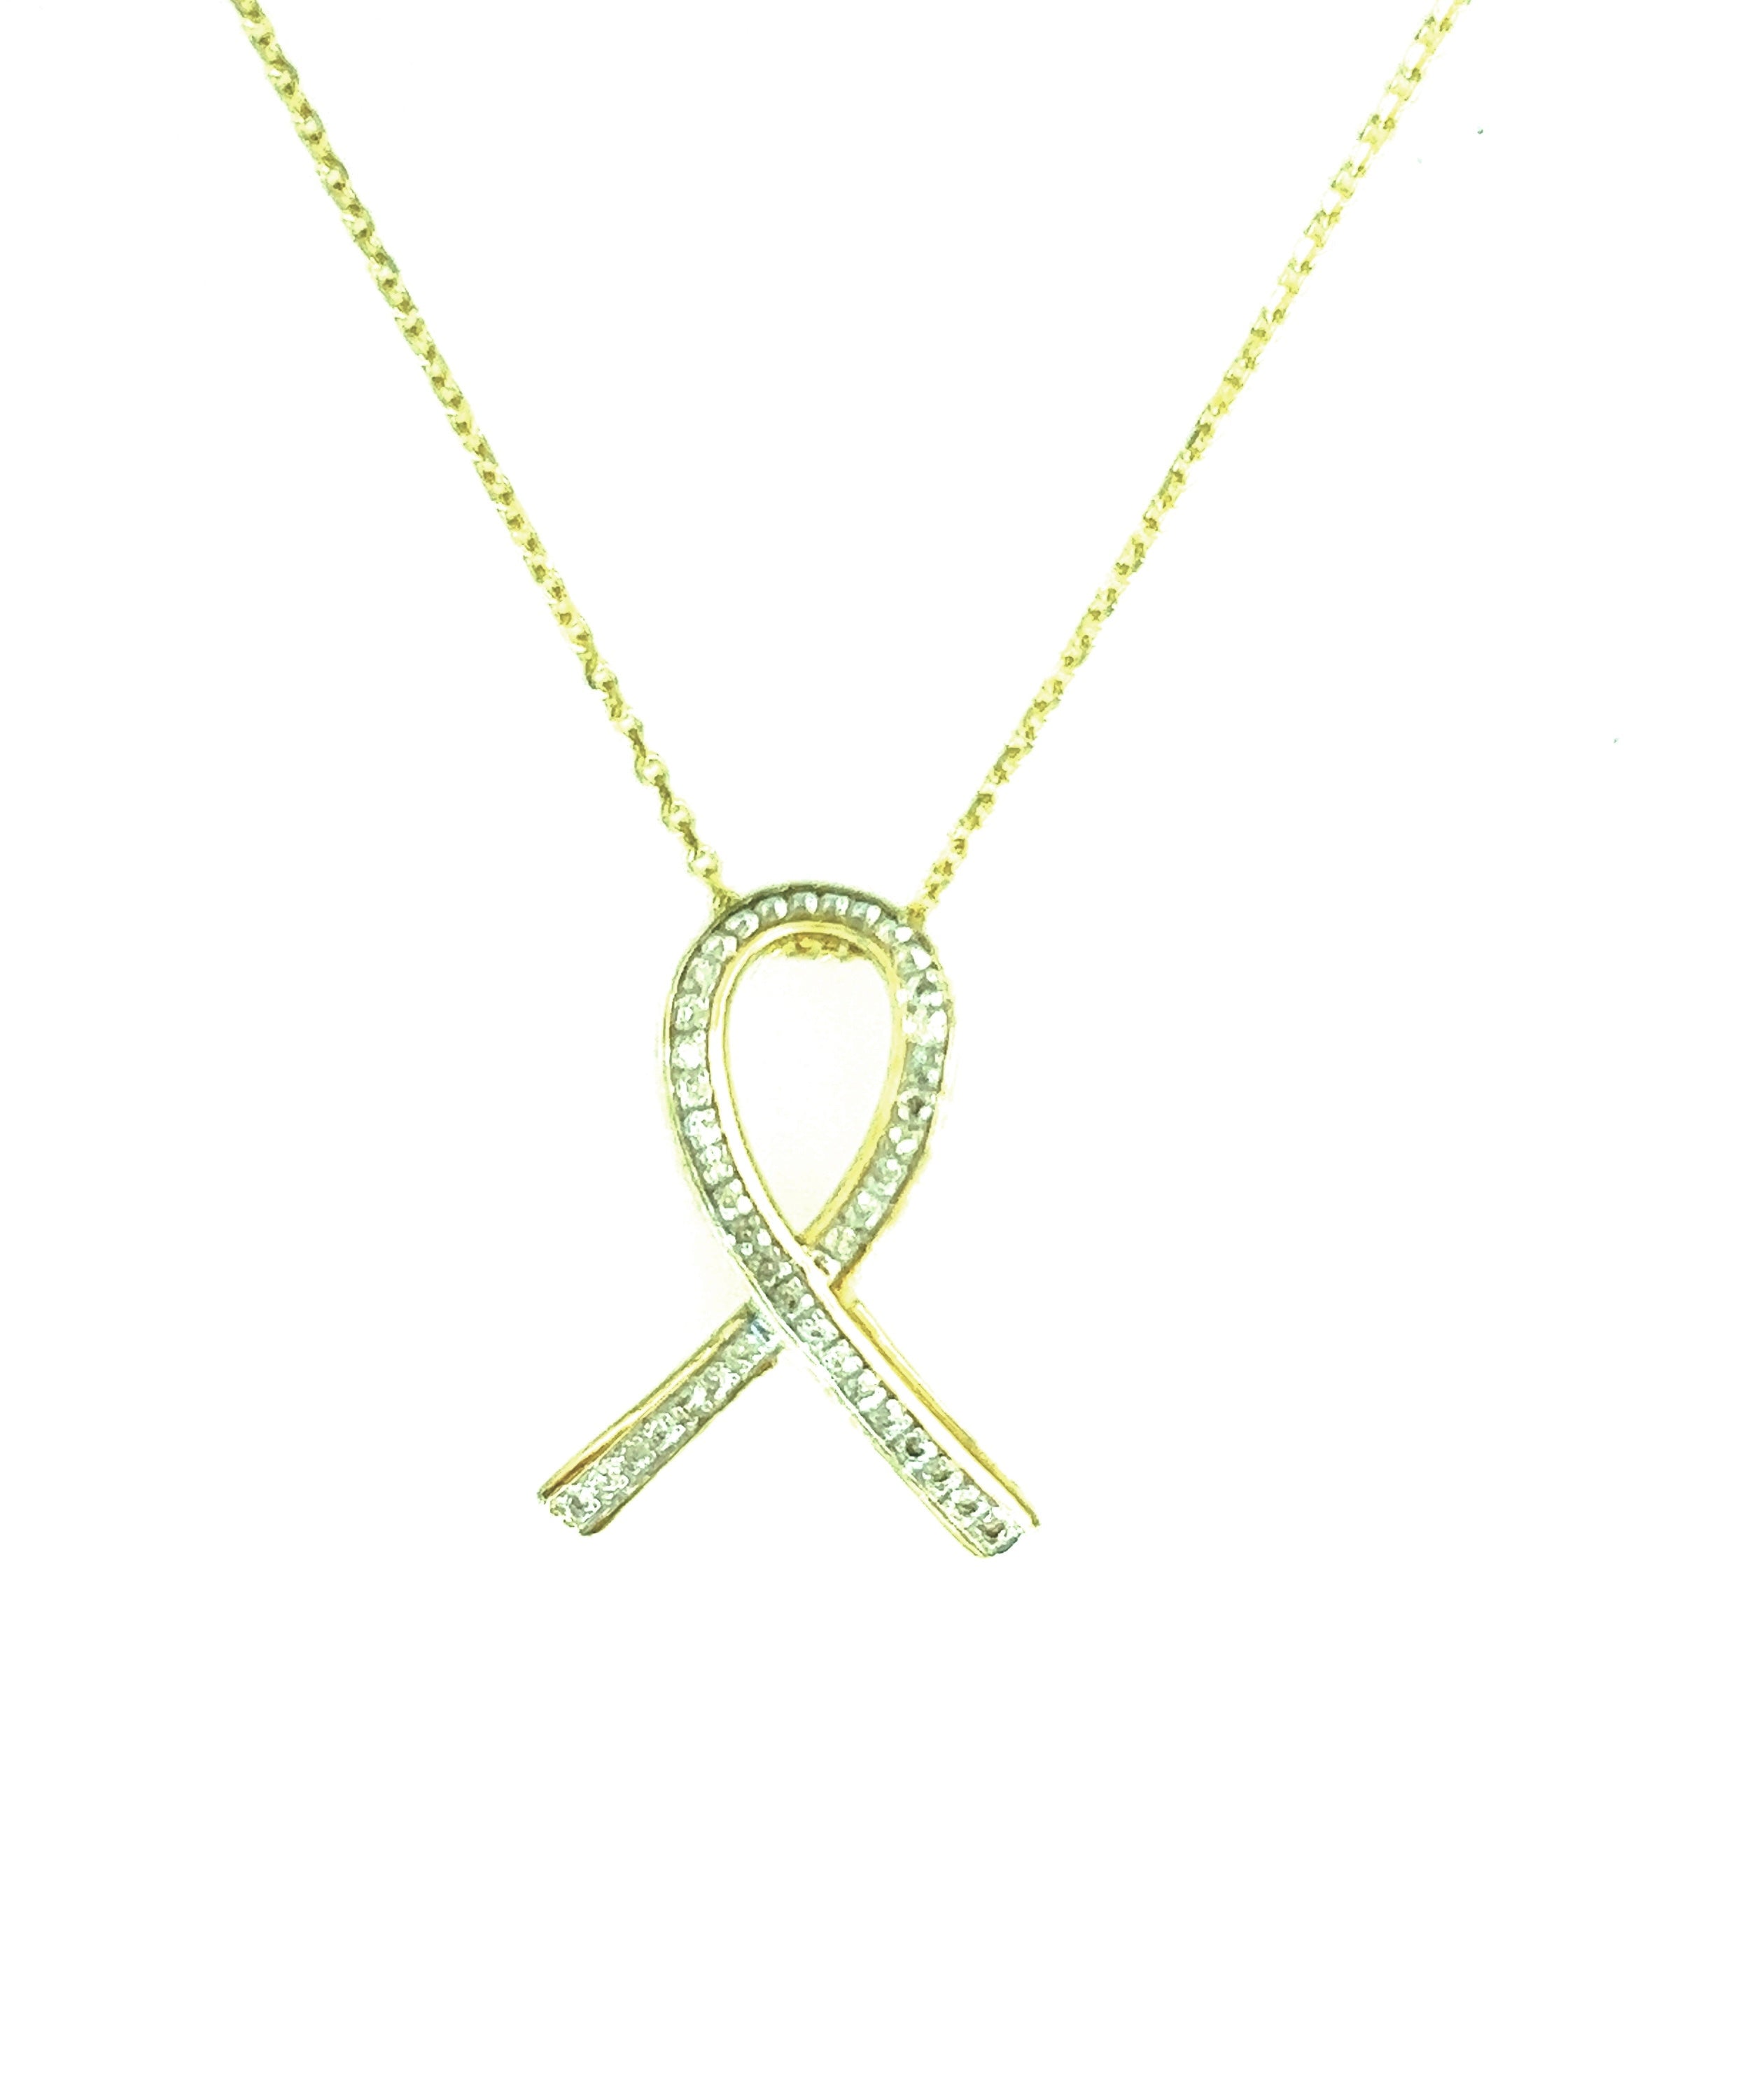 Gold Awareness ribbon pendant with diamonds